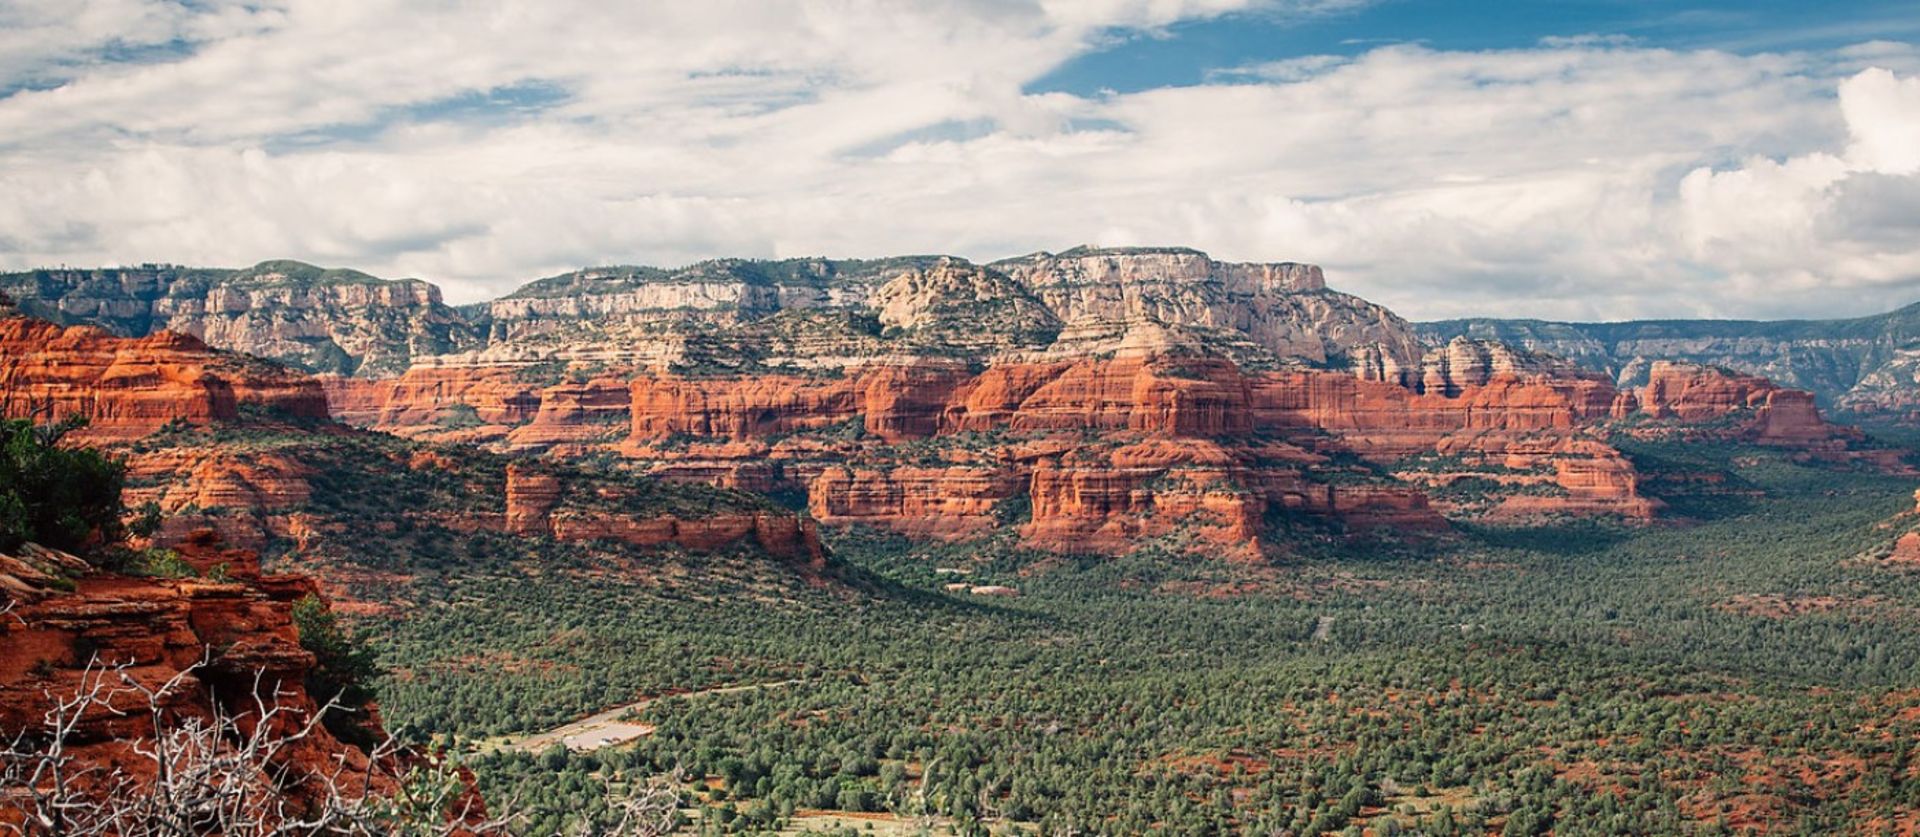 2.5 Acres with Indescribable Views in Navajo County, Arizona!